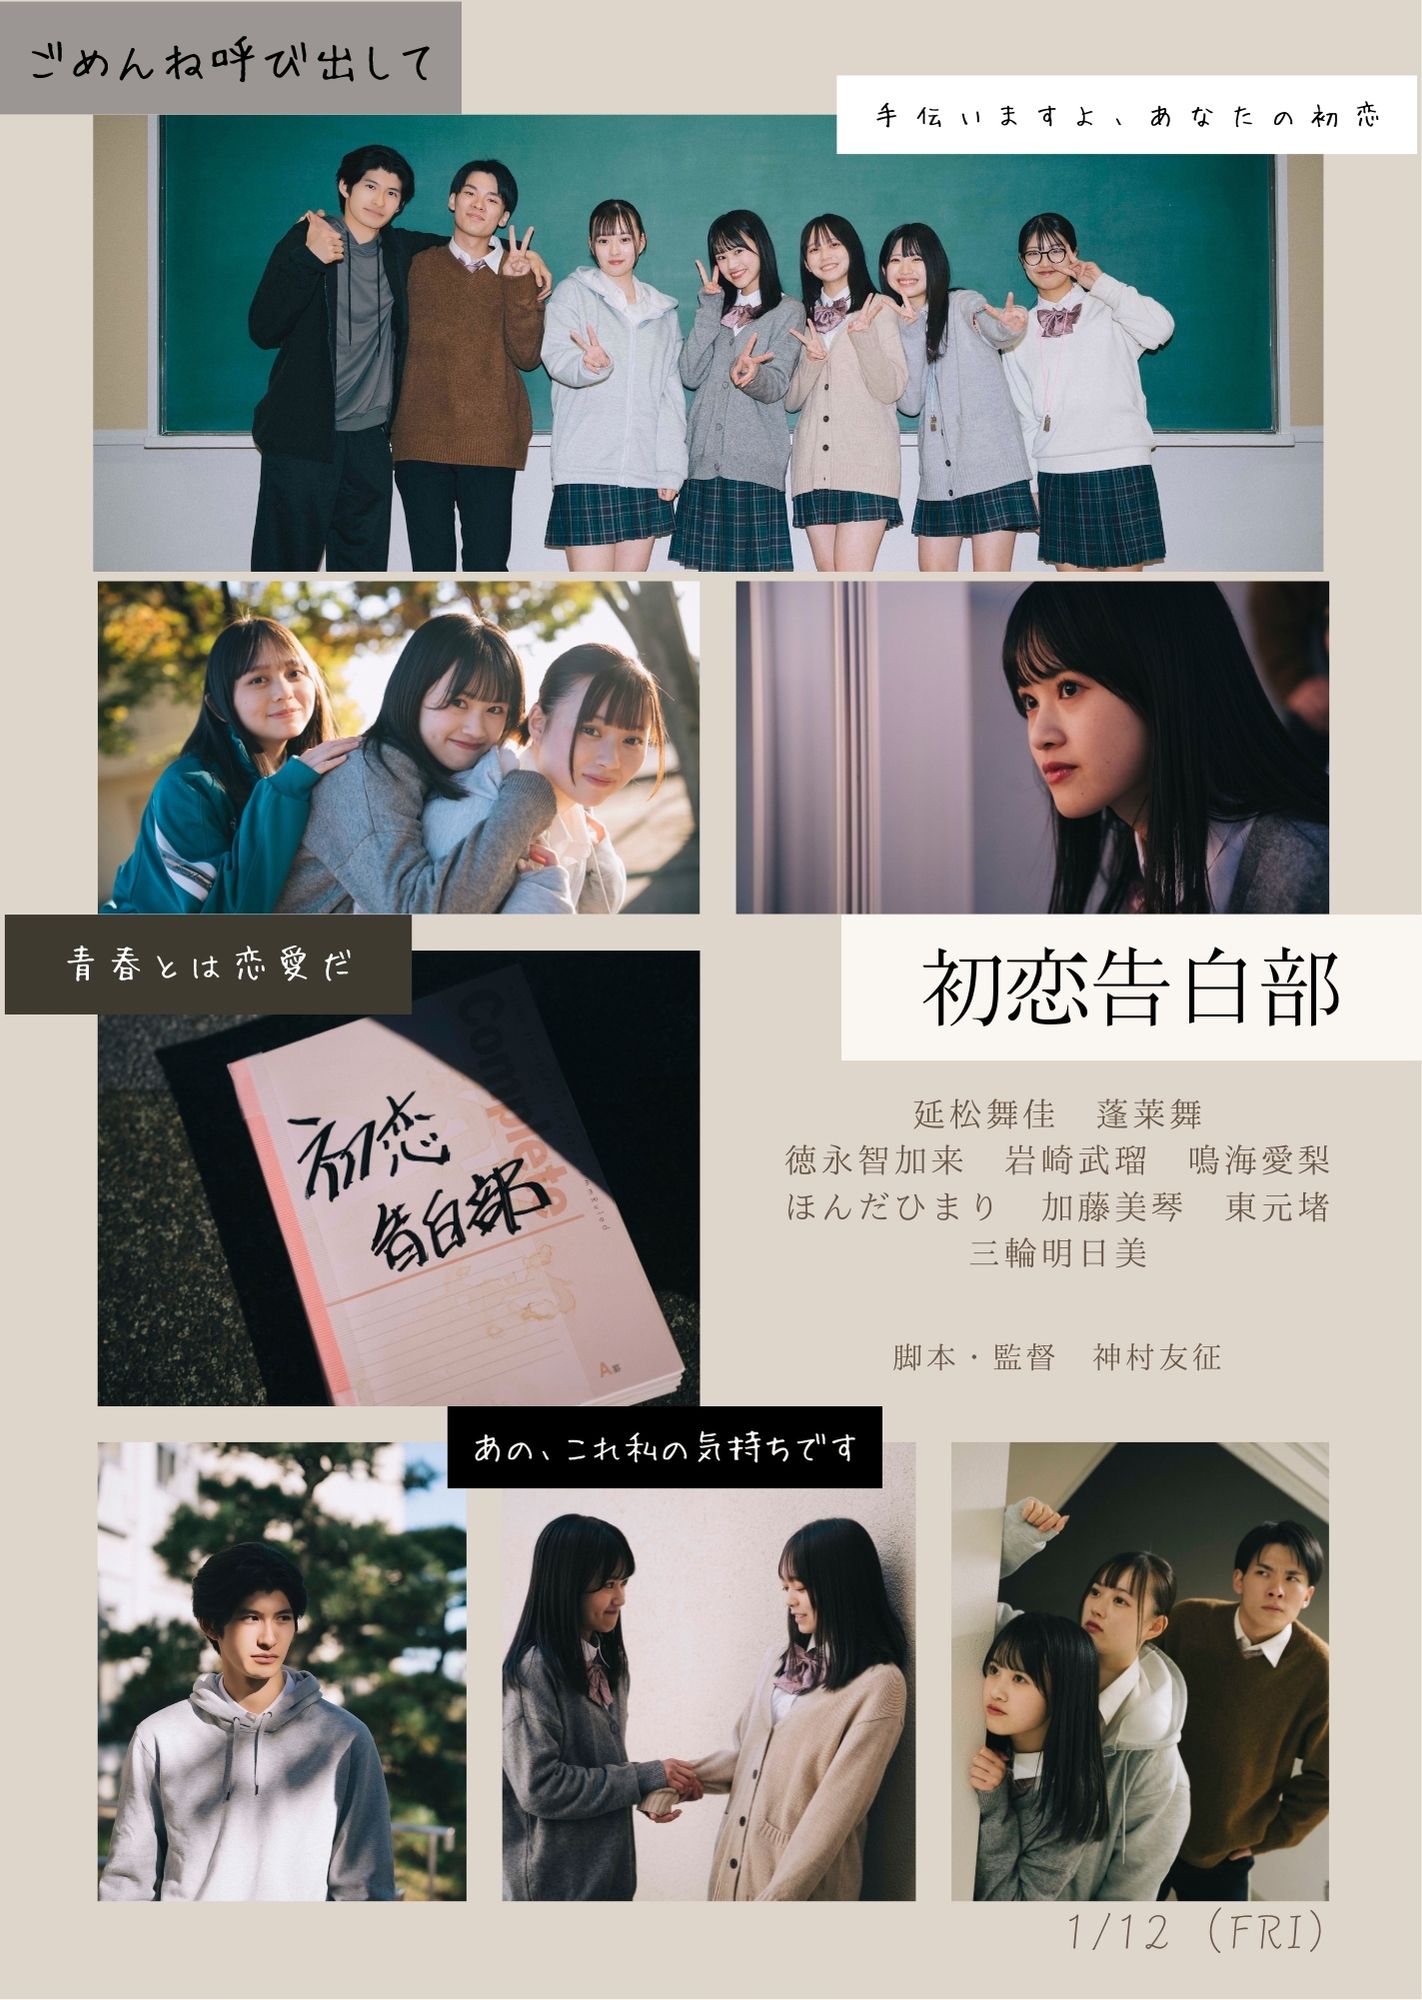 【RANKUTV】初恋告白部ポスター (30.3 x 42.6 cm)のコピー